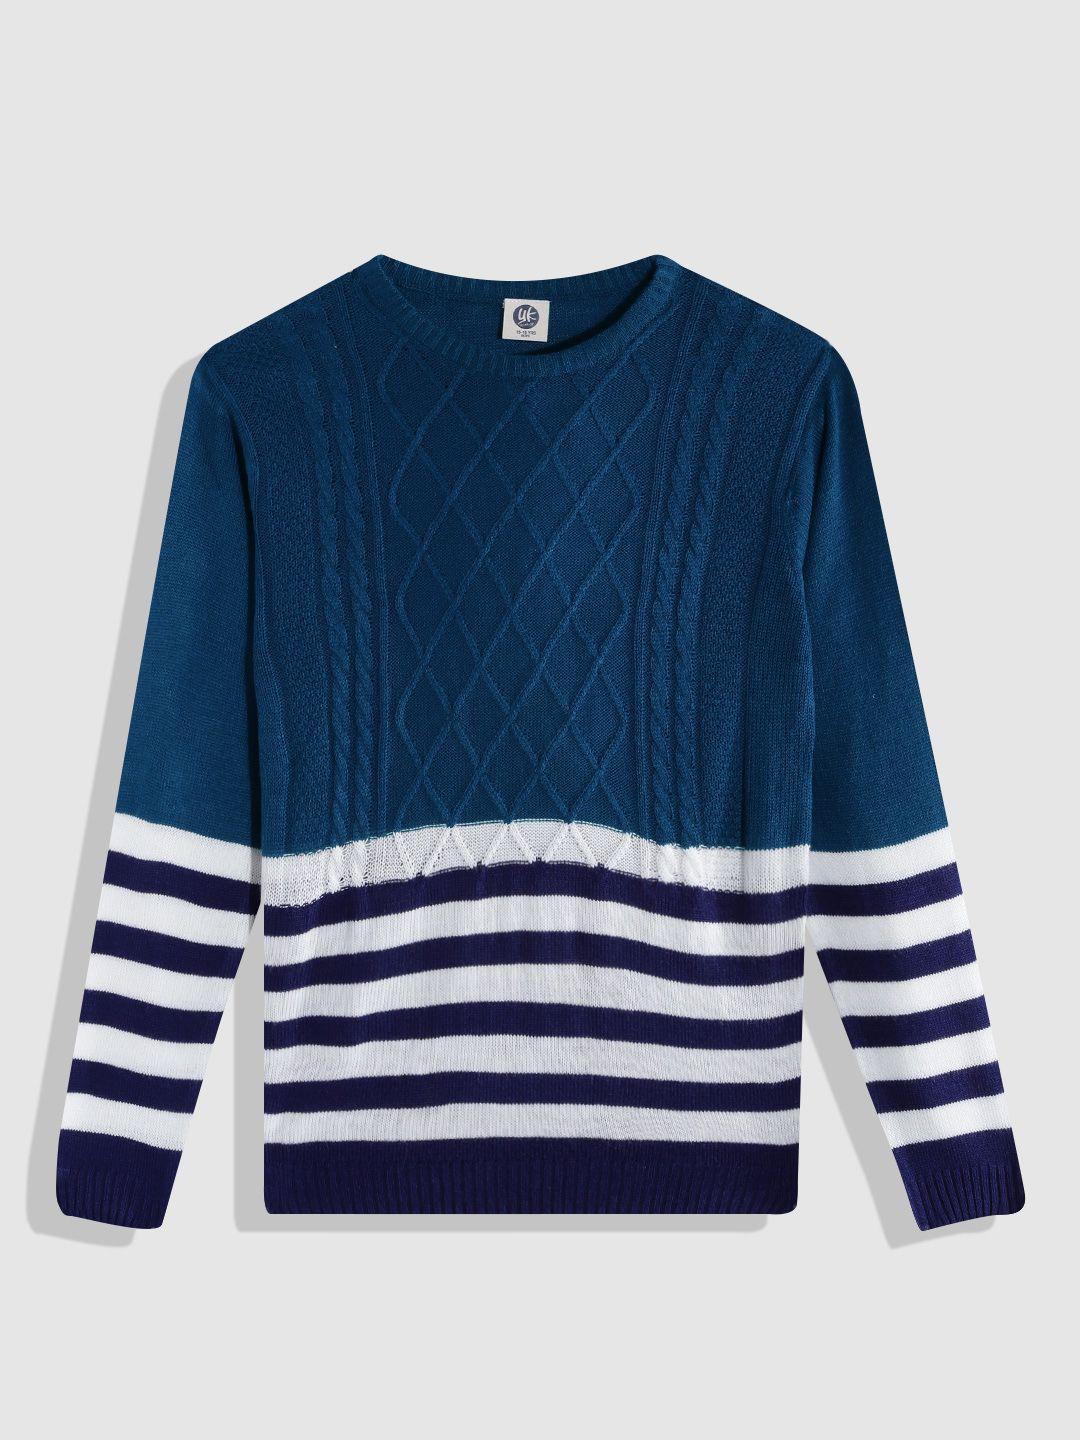 yk boys blue & white striped sweater